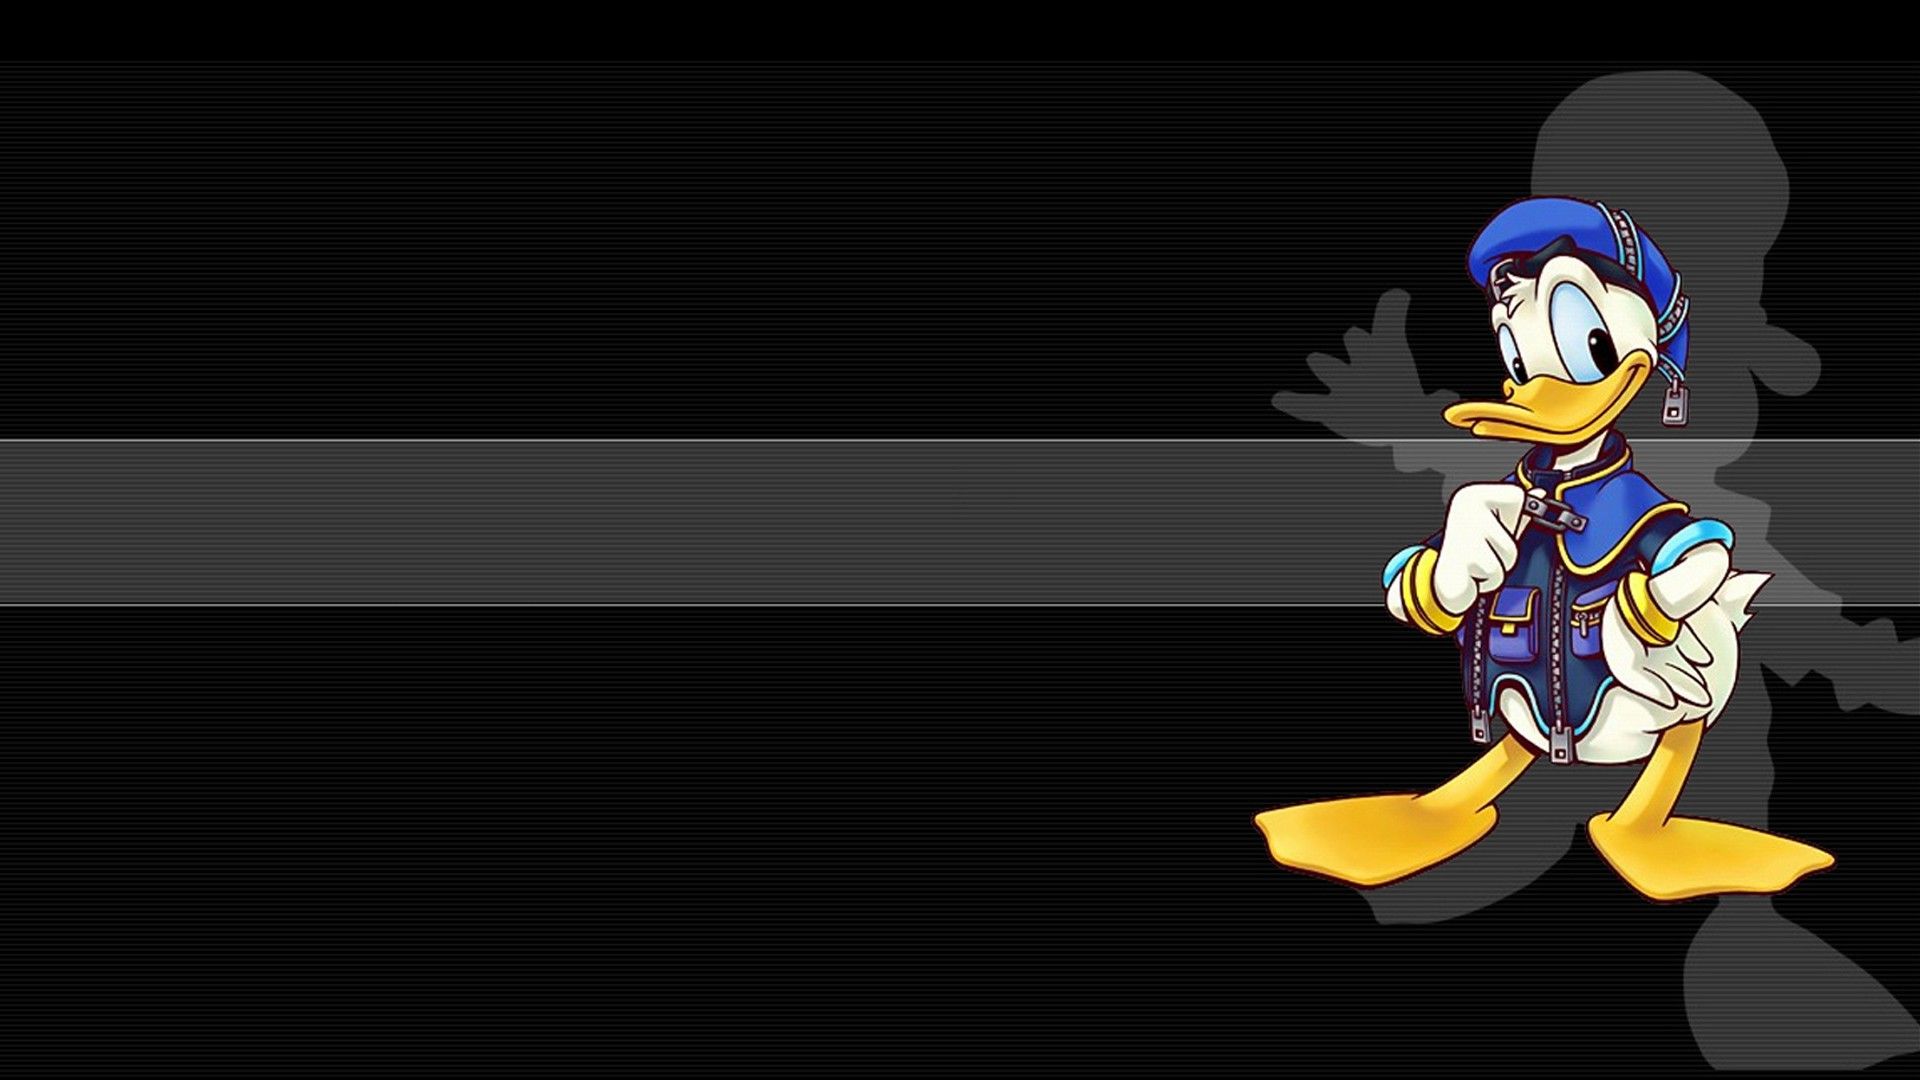 Donald Duck Background. Donald Duck